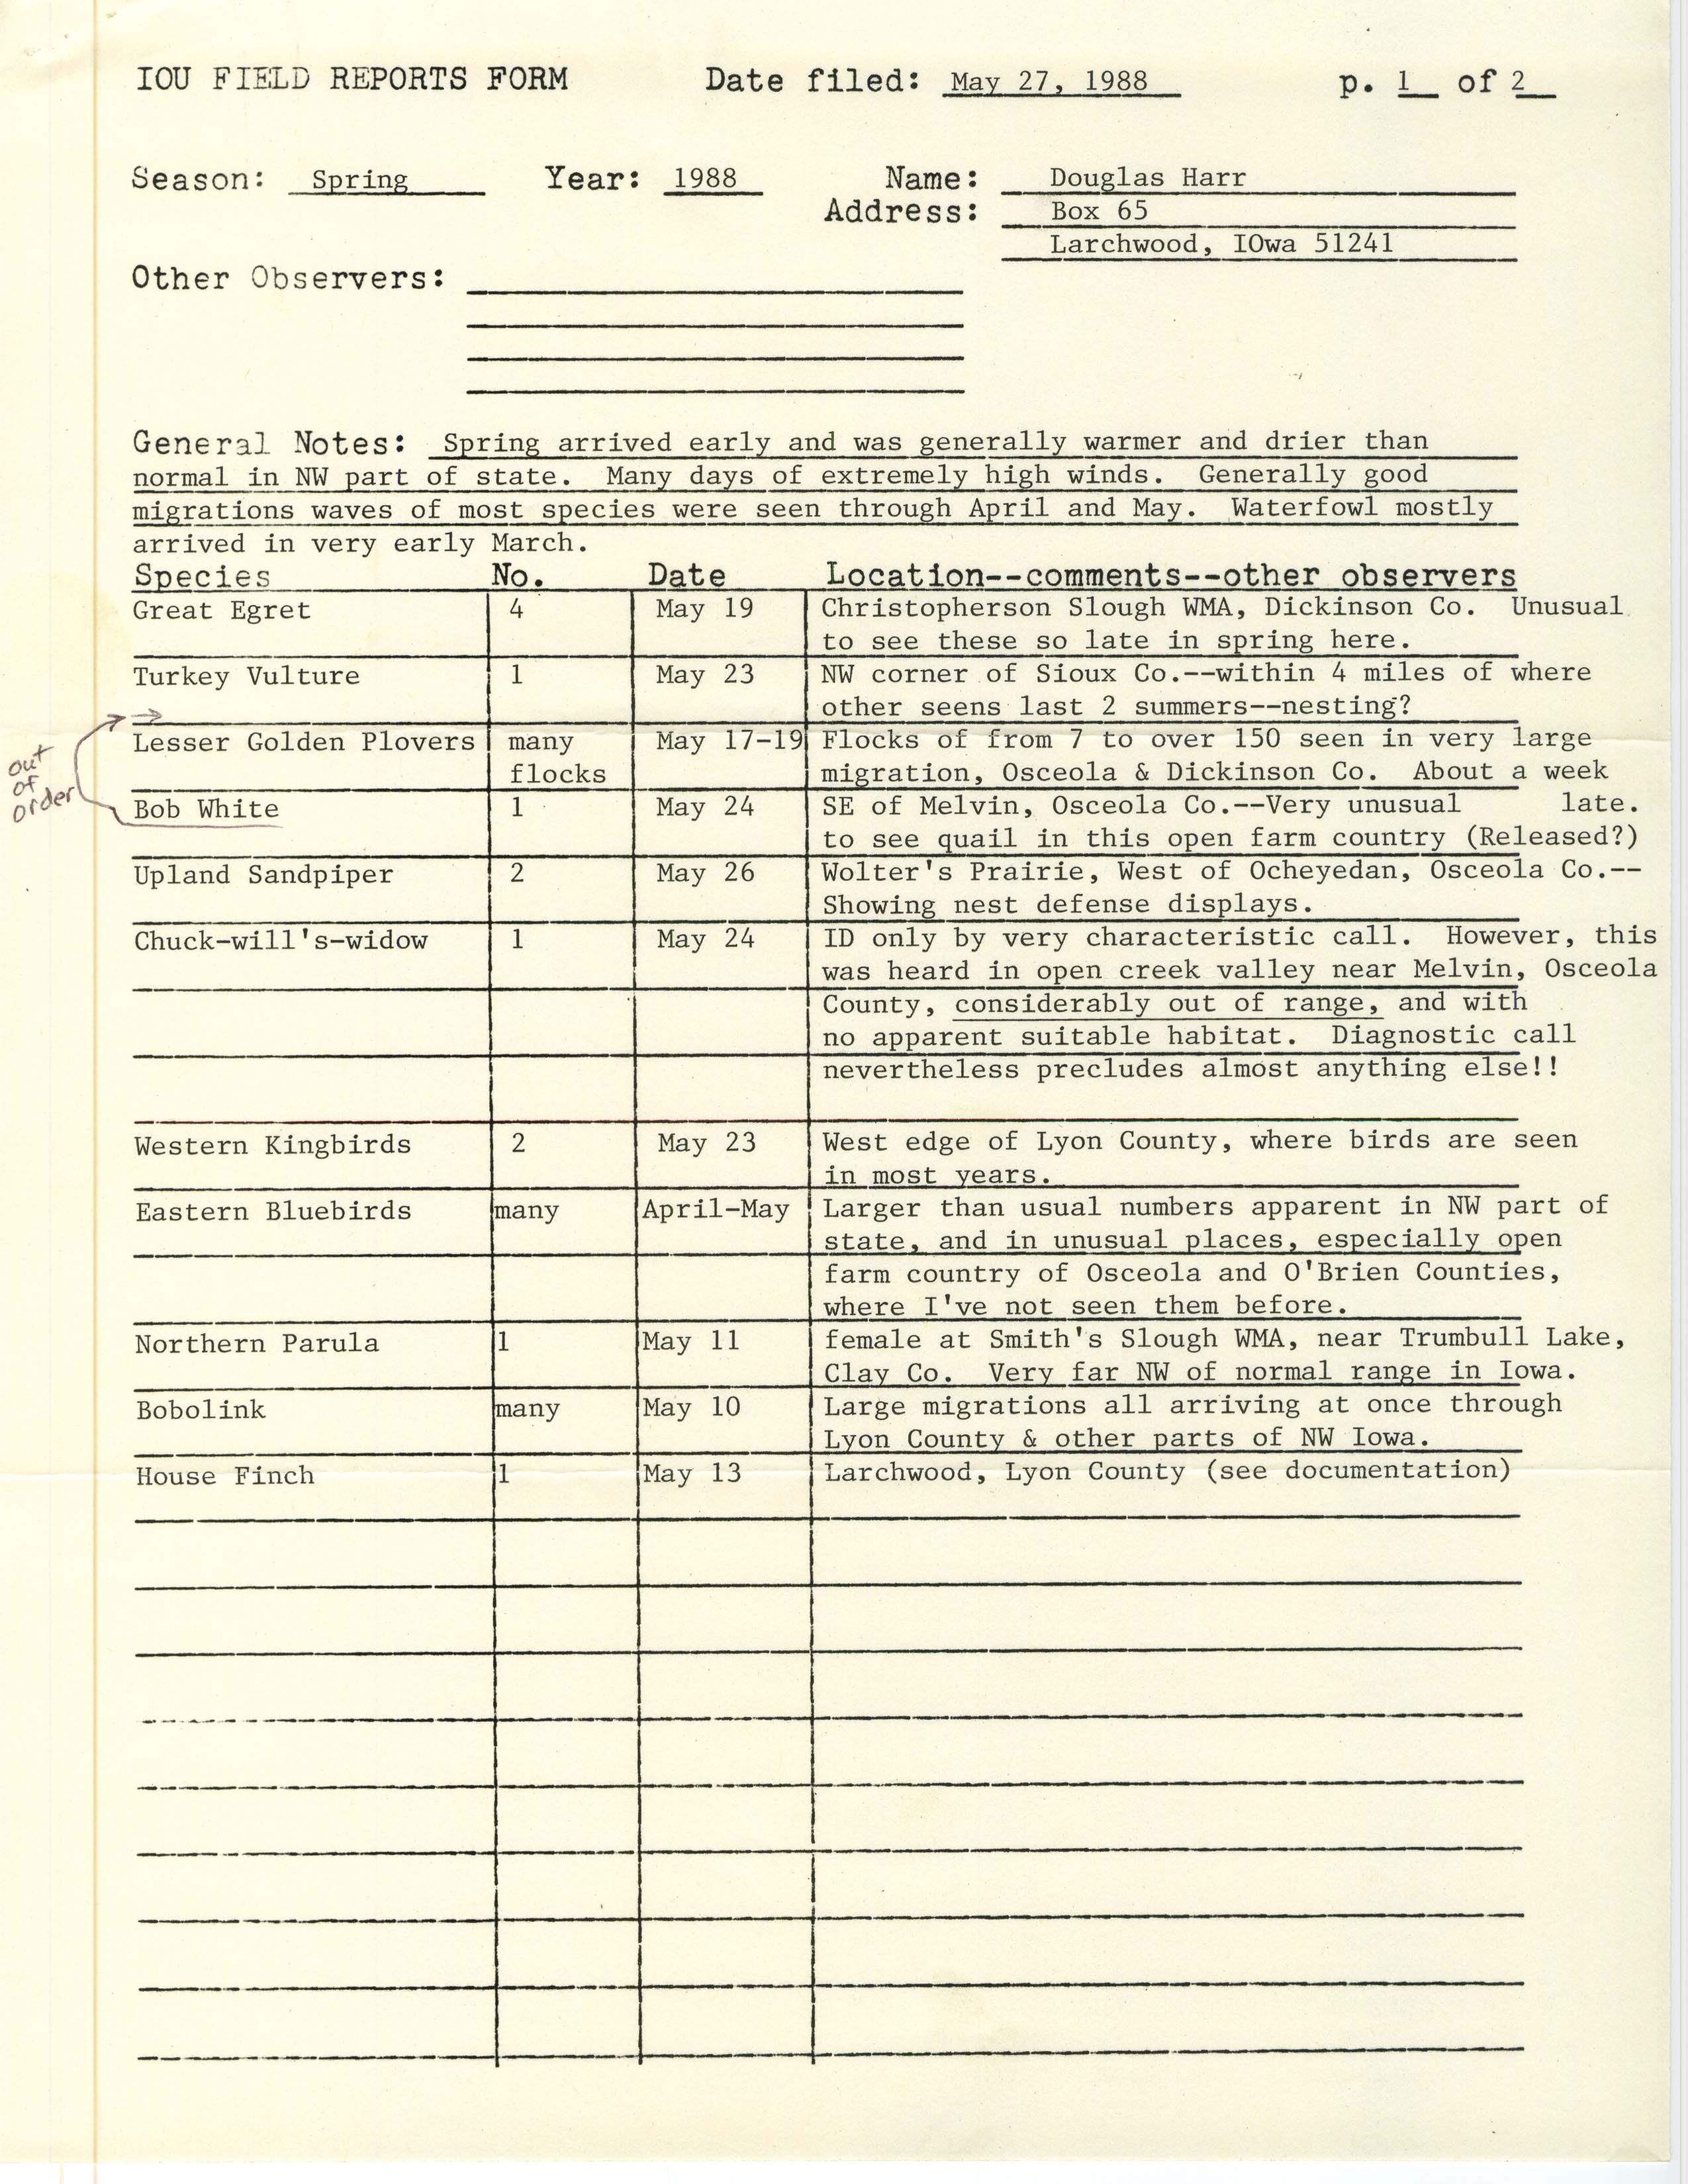 IOU field reports form, Douglas C. Harr, May 27, 1988  